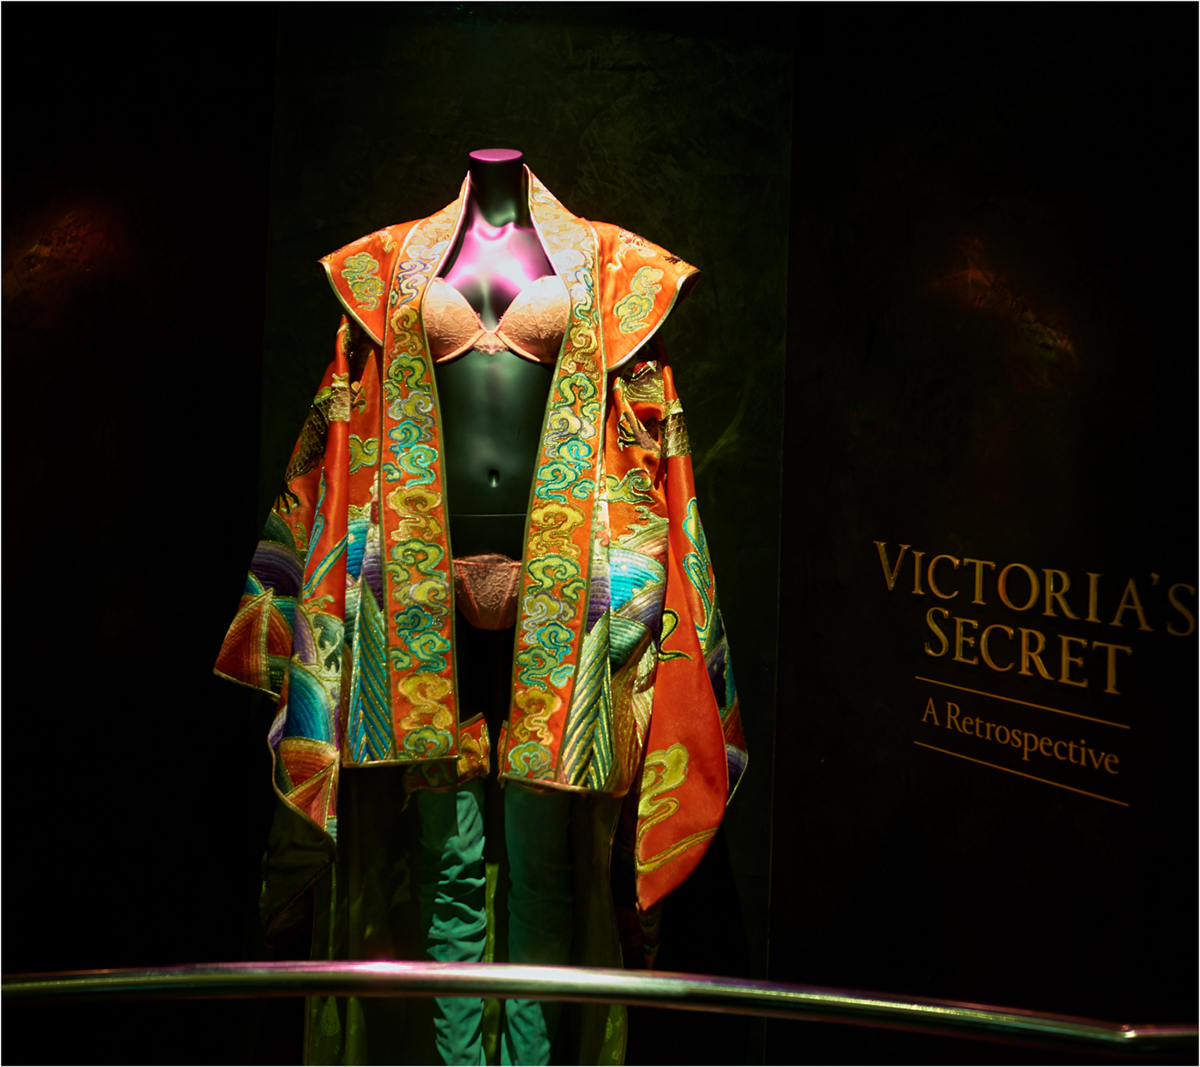 victoria secret leica sl Lecia Noctilux new york city gallery exhibits lingerie